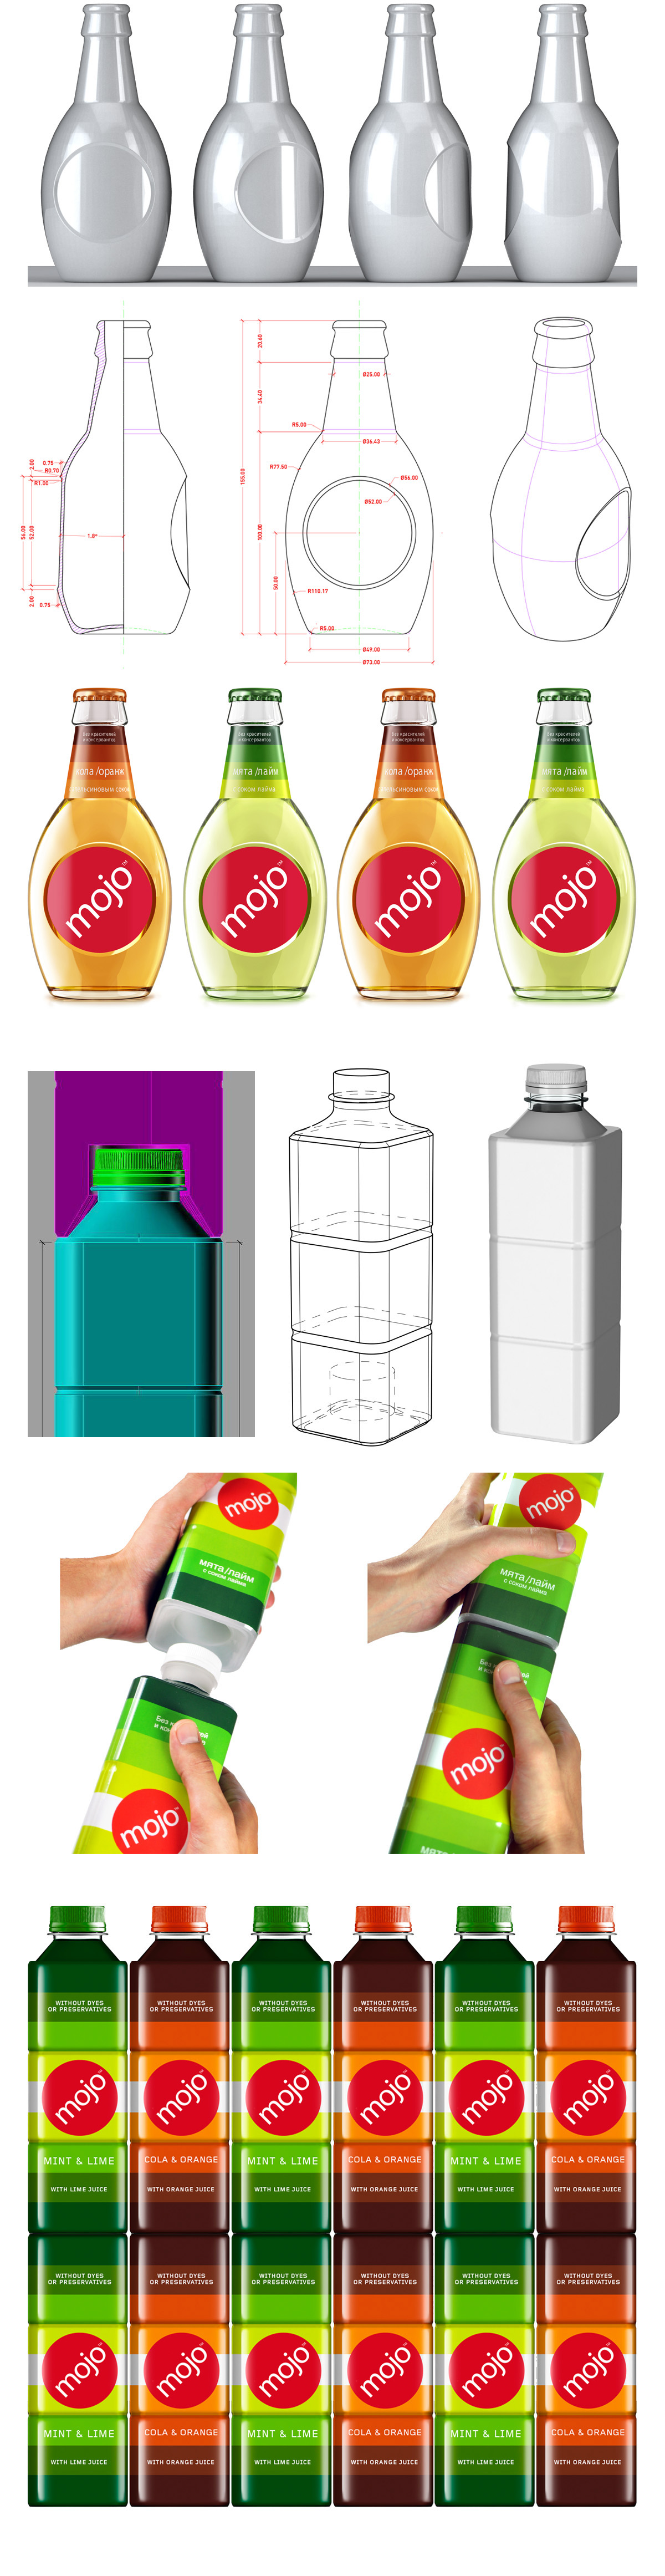 diseño botella design bottle juice Zumo